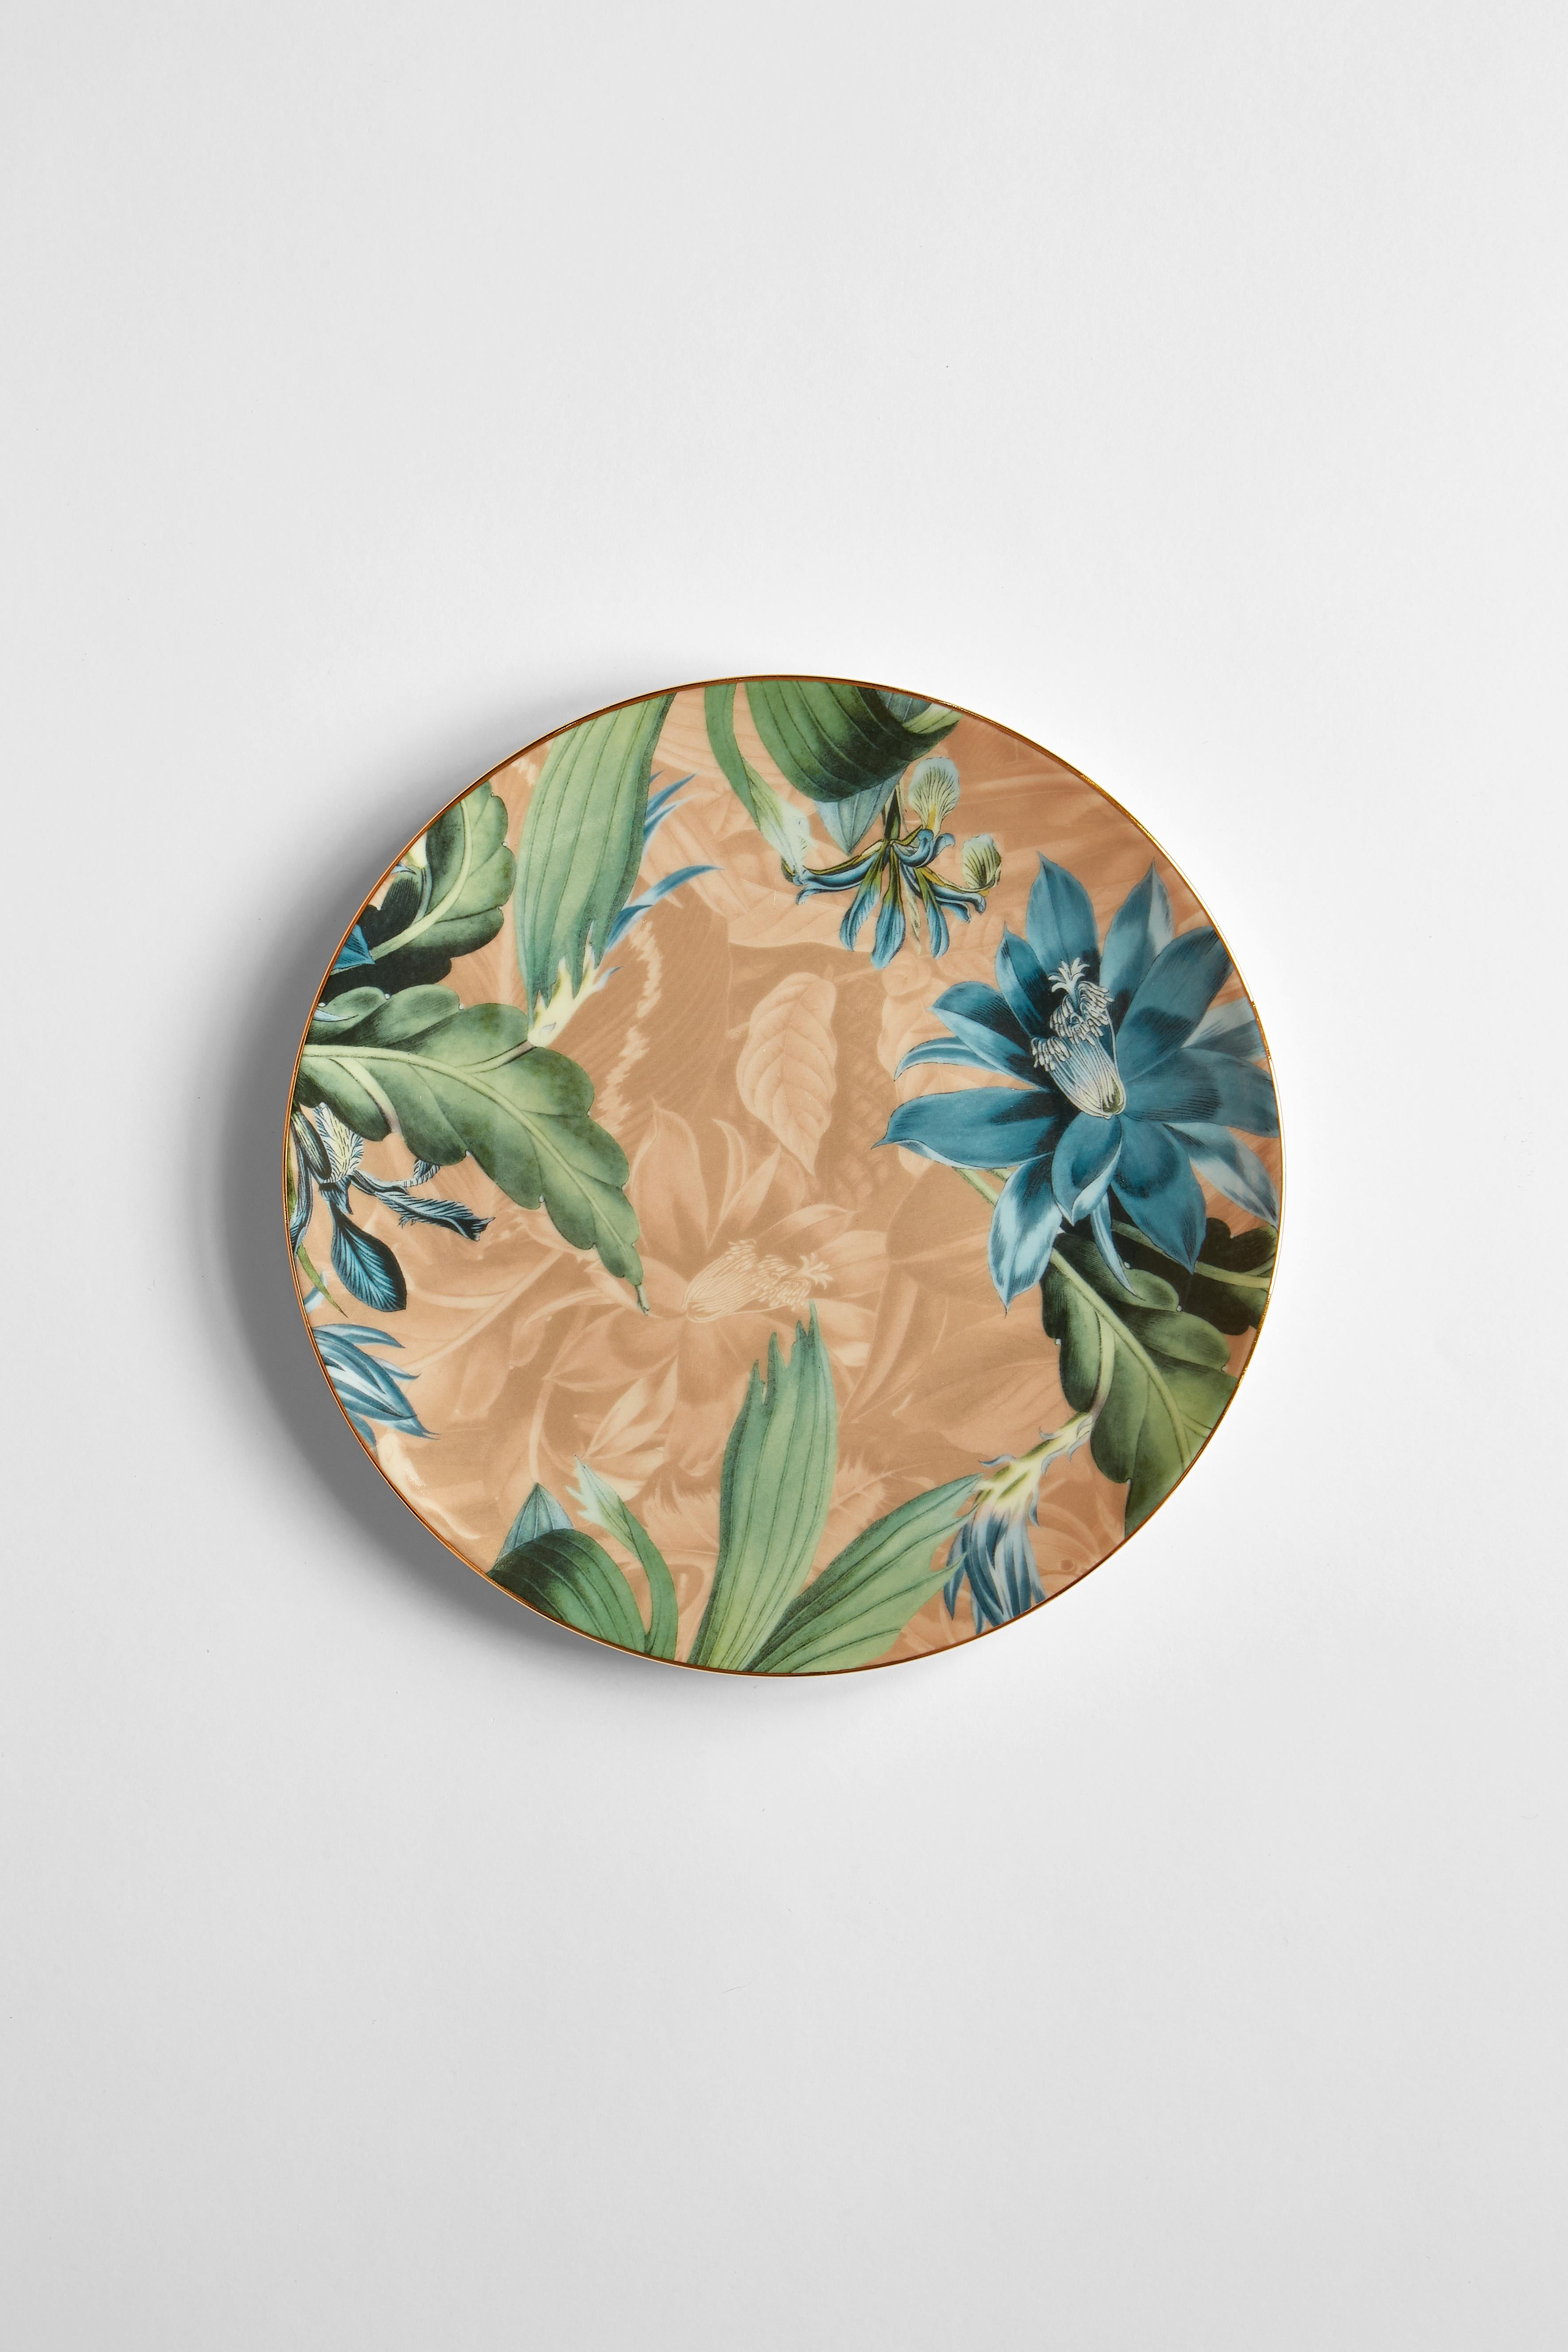 Animalia, Six Contemporary Porcelain Dessert Plates with Decorative Design For Sale 1